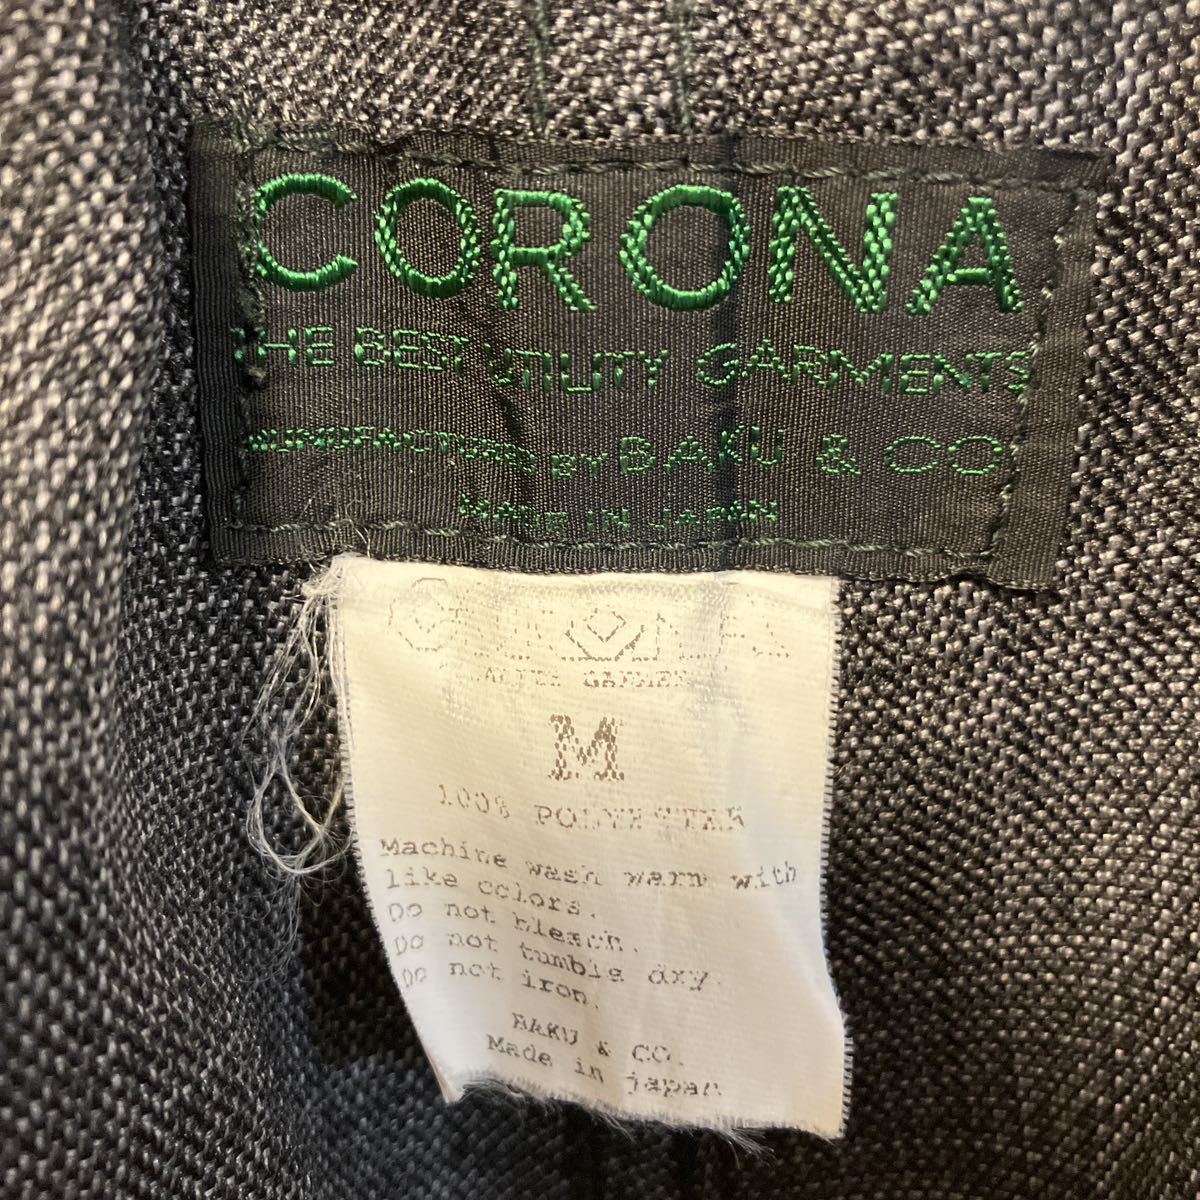  Corona CORONA / легкий брюки / серый / полиэстер / сделано в Японии / размер M